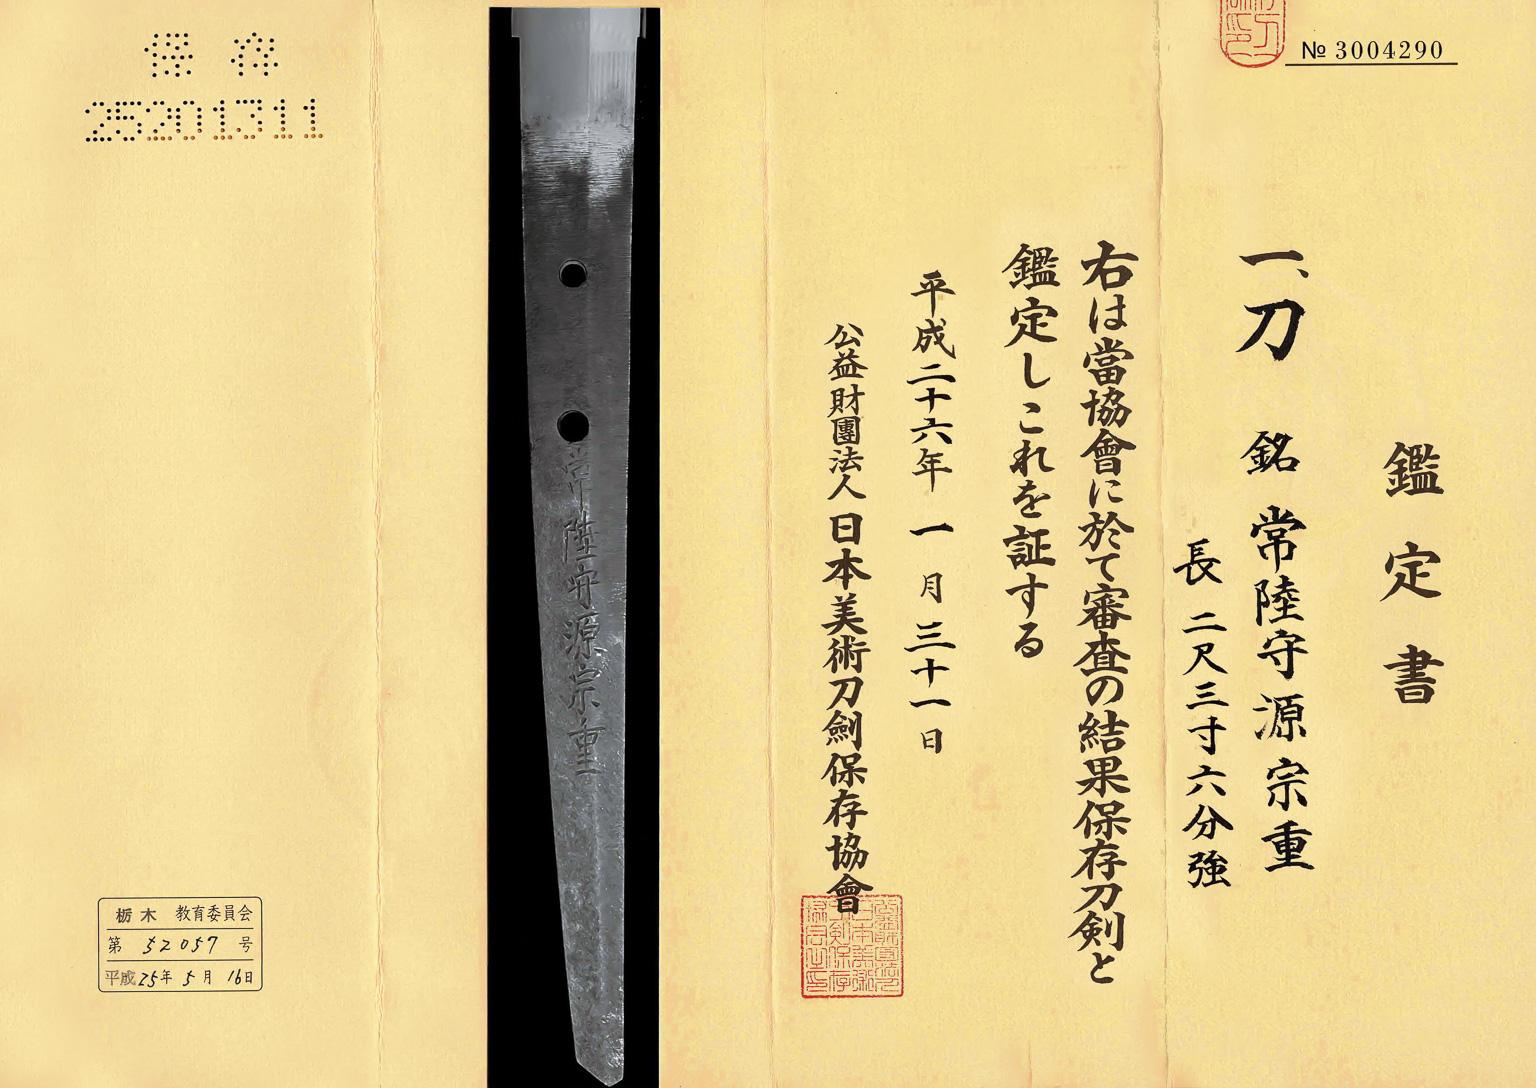 Signed: Hitachi no kami Minamoto Muneshige

 
Measures:
Nagasa [length]: 71.6 cm, Motohaba [width at bottom]: 3.1 cm
Sakihaba [width at top]: 2.1 cm, Sori [curvature]: 1.0 cm
Motokasane [thickness]: 6.3 mm
Sugata